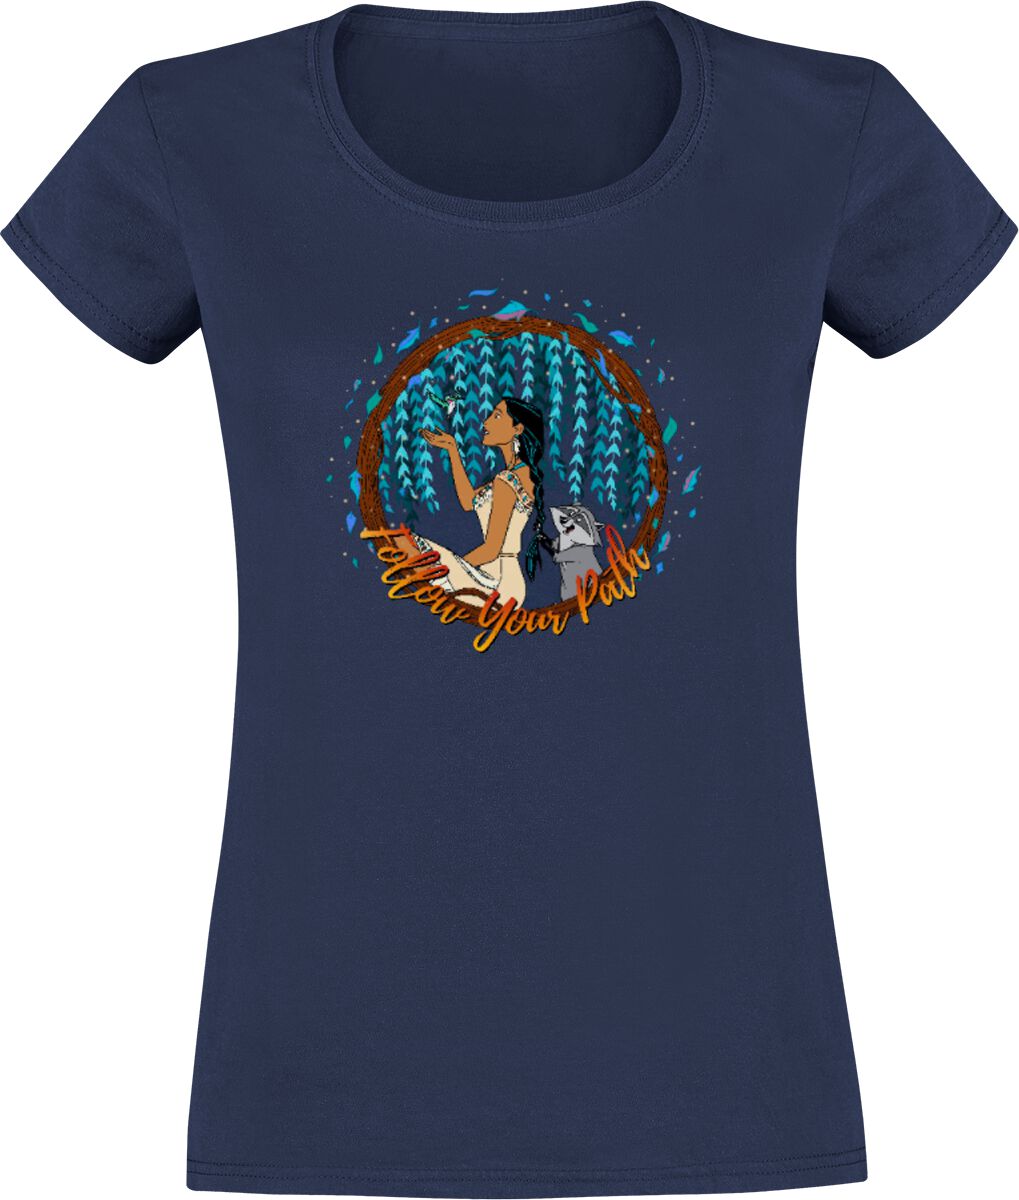 Pocahontas Pocahontas und Meeko T-Shirt blau in L POD - 859648 8186371